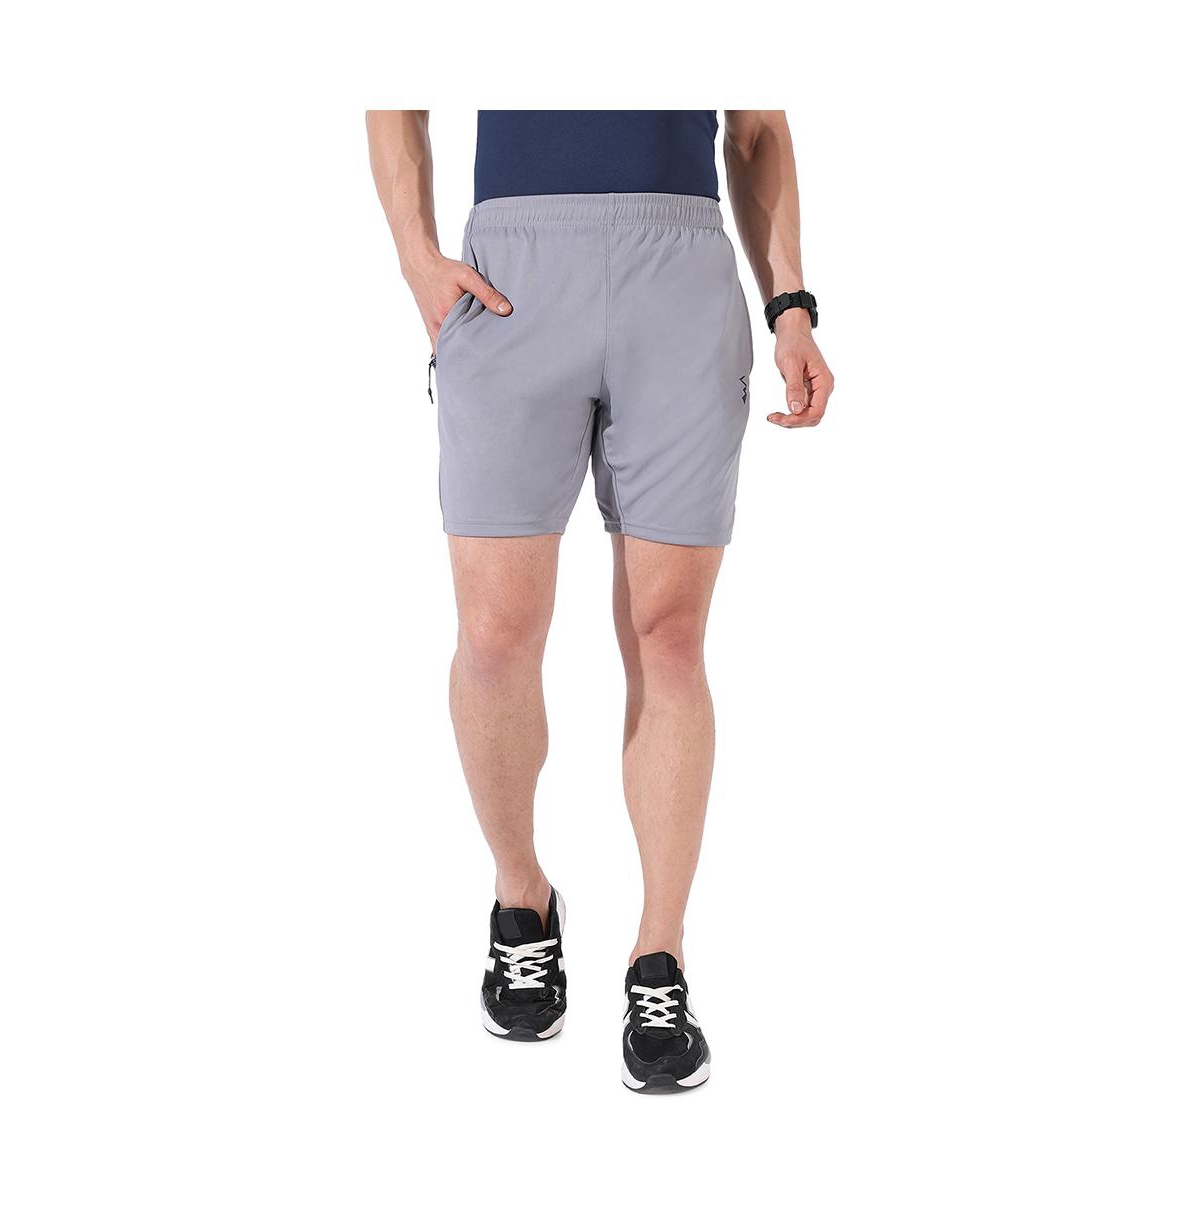 Men's Light Grey Basic Activewear Short - Light grey